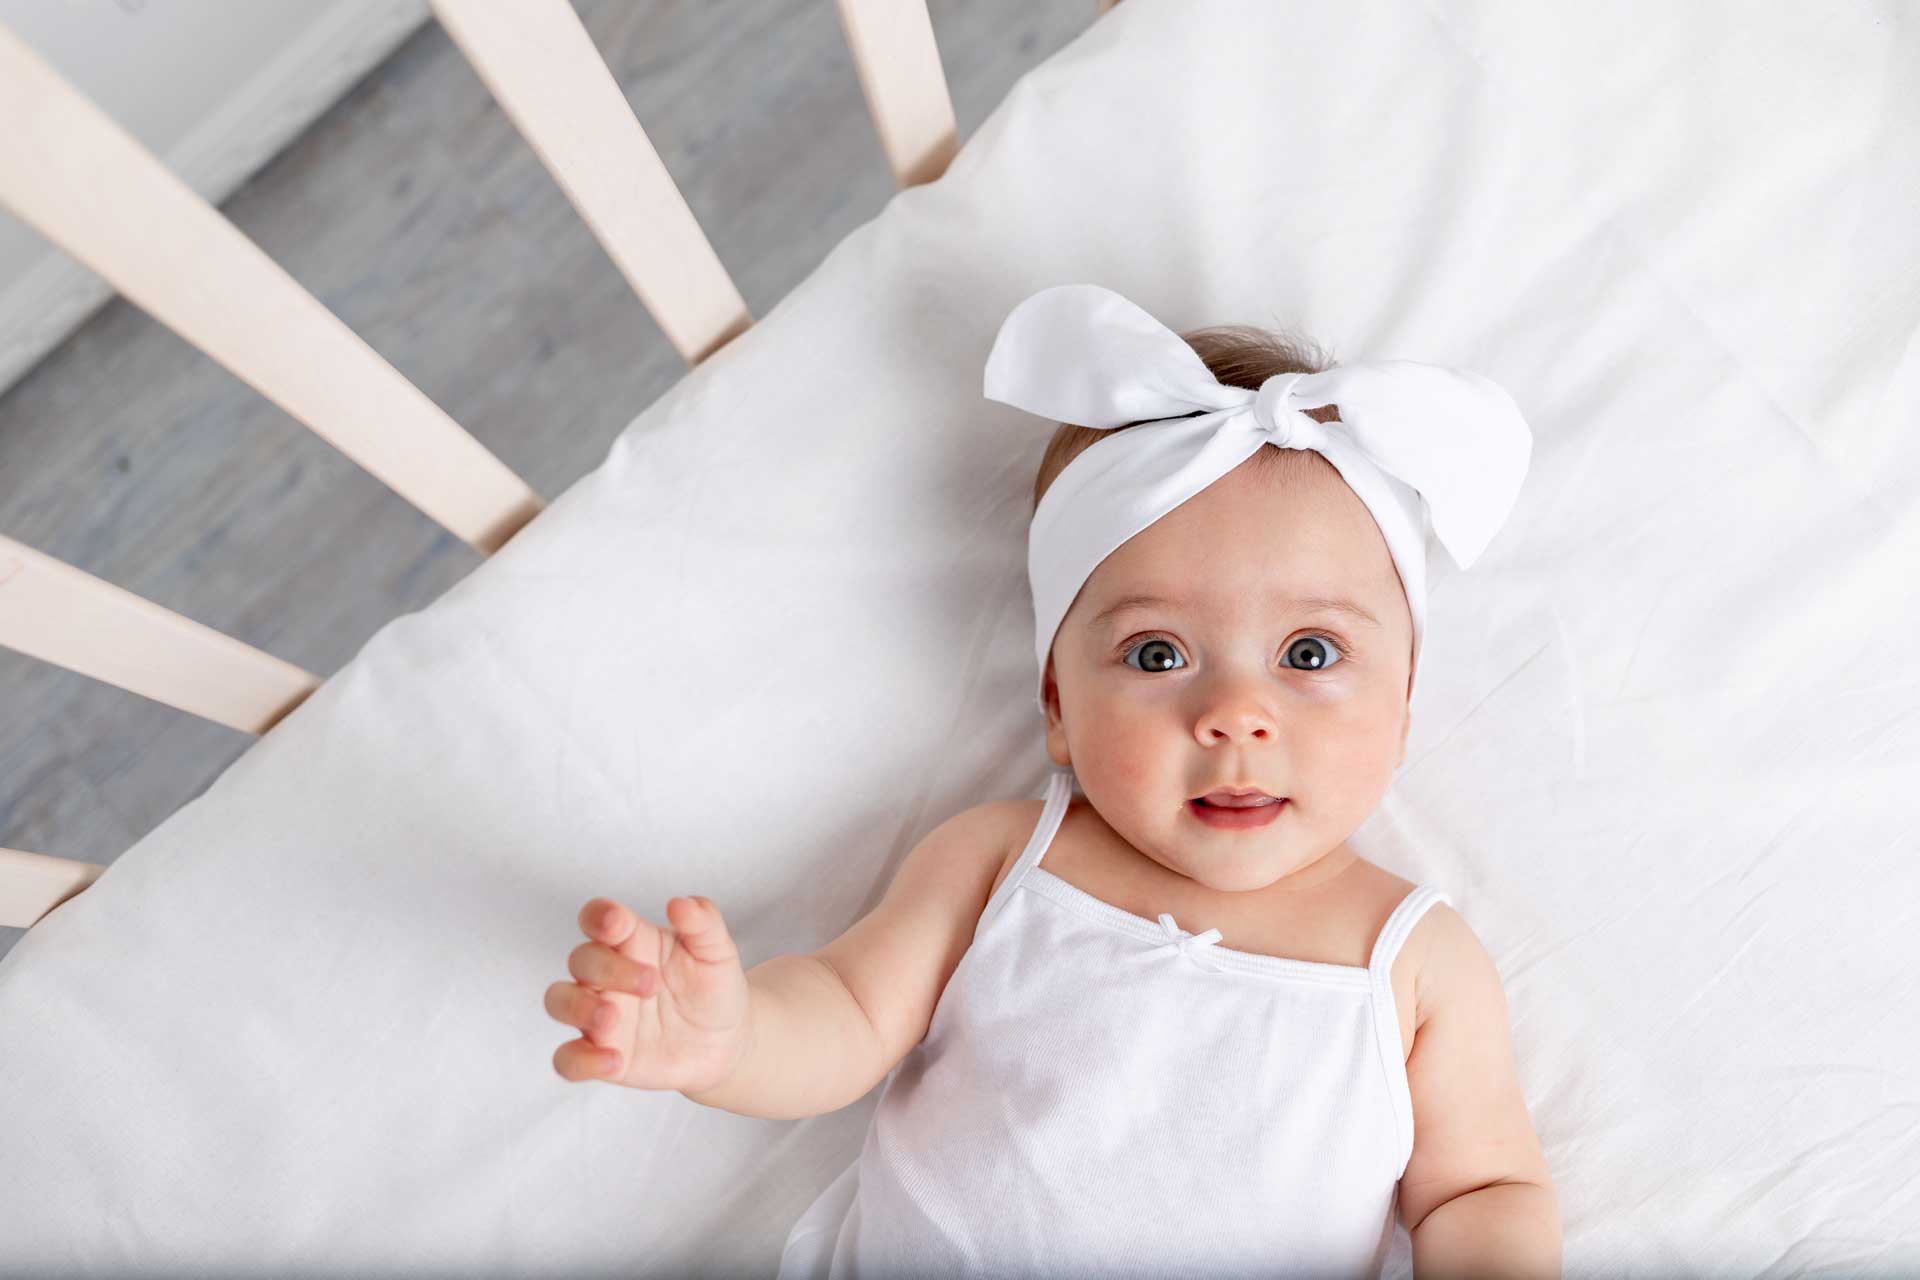 Trends in Baby Girl Clothing Australia, Newborns